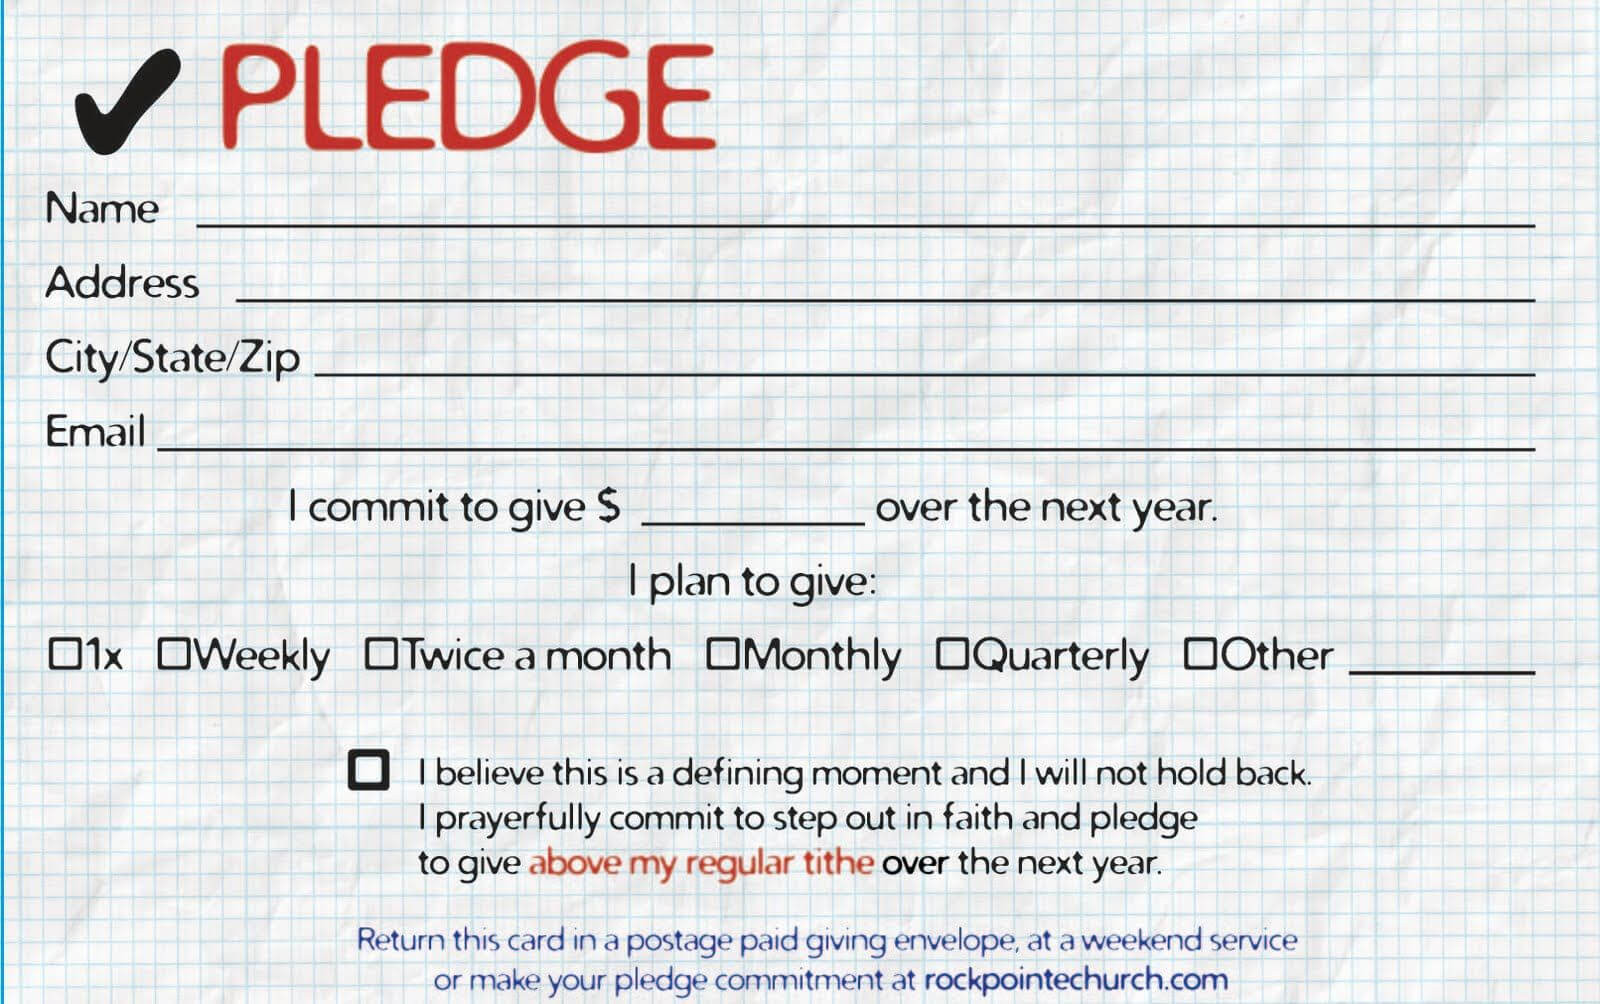 Pledge Cards For Churches | Pledge Card Templates | Card Regarding Pledge Card Template For Church